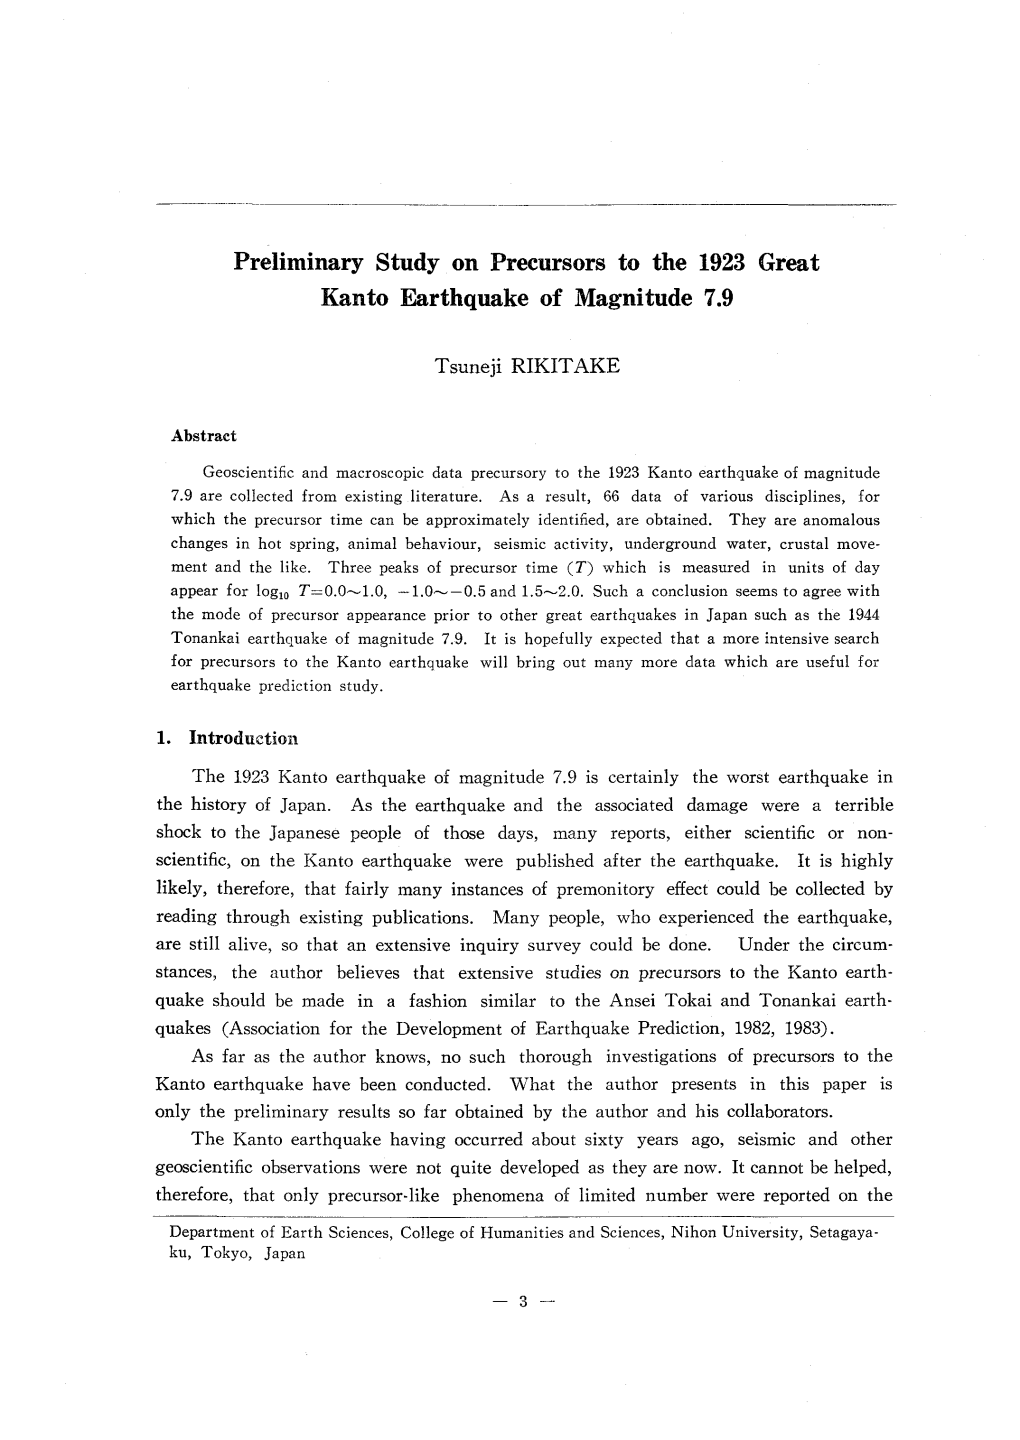 Preliminary Study on Precursors to the 1923 Great Kanto Earthquake of Magnitude 7.9